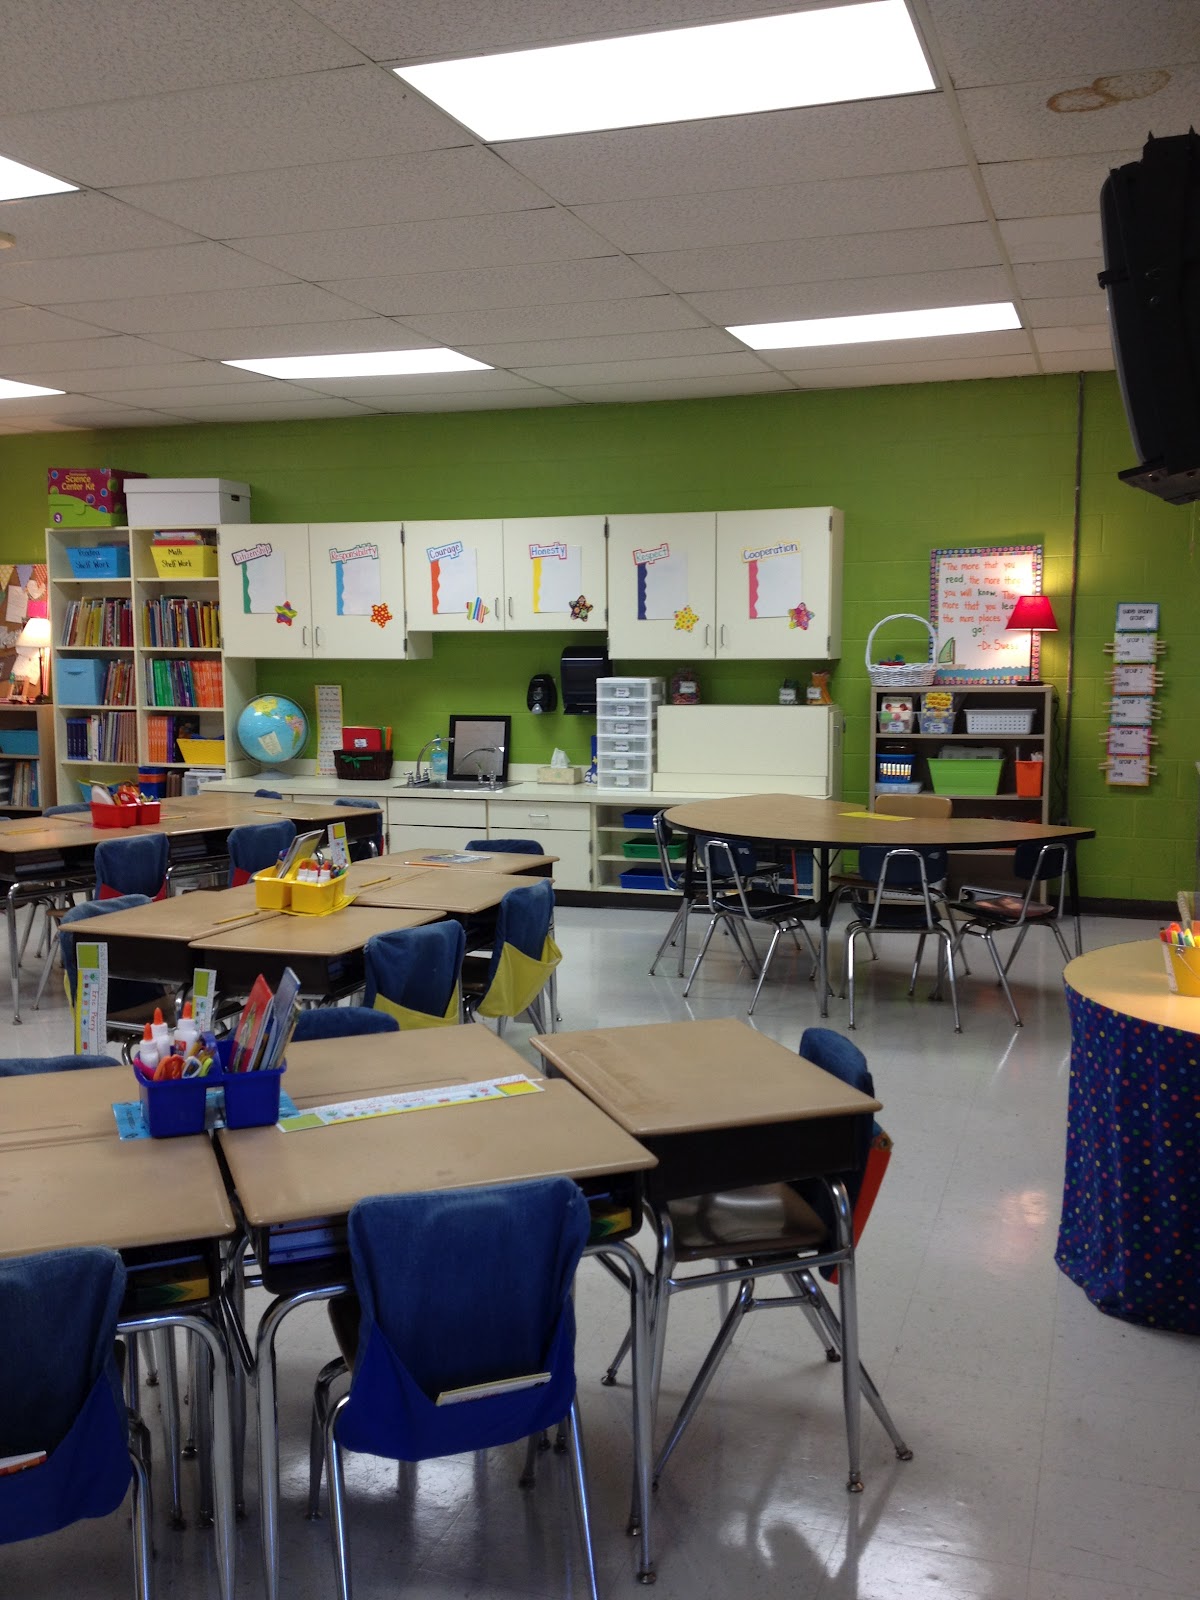 The Good Life: My New Classroom!
